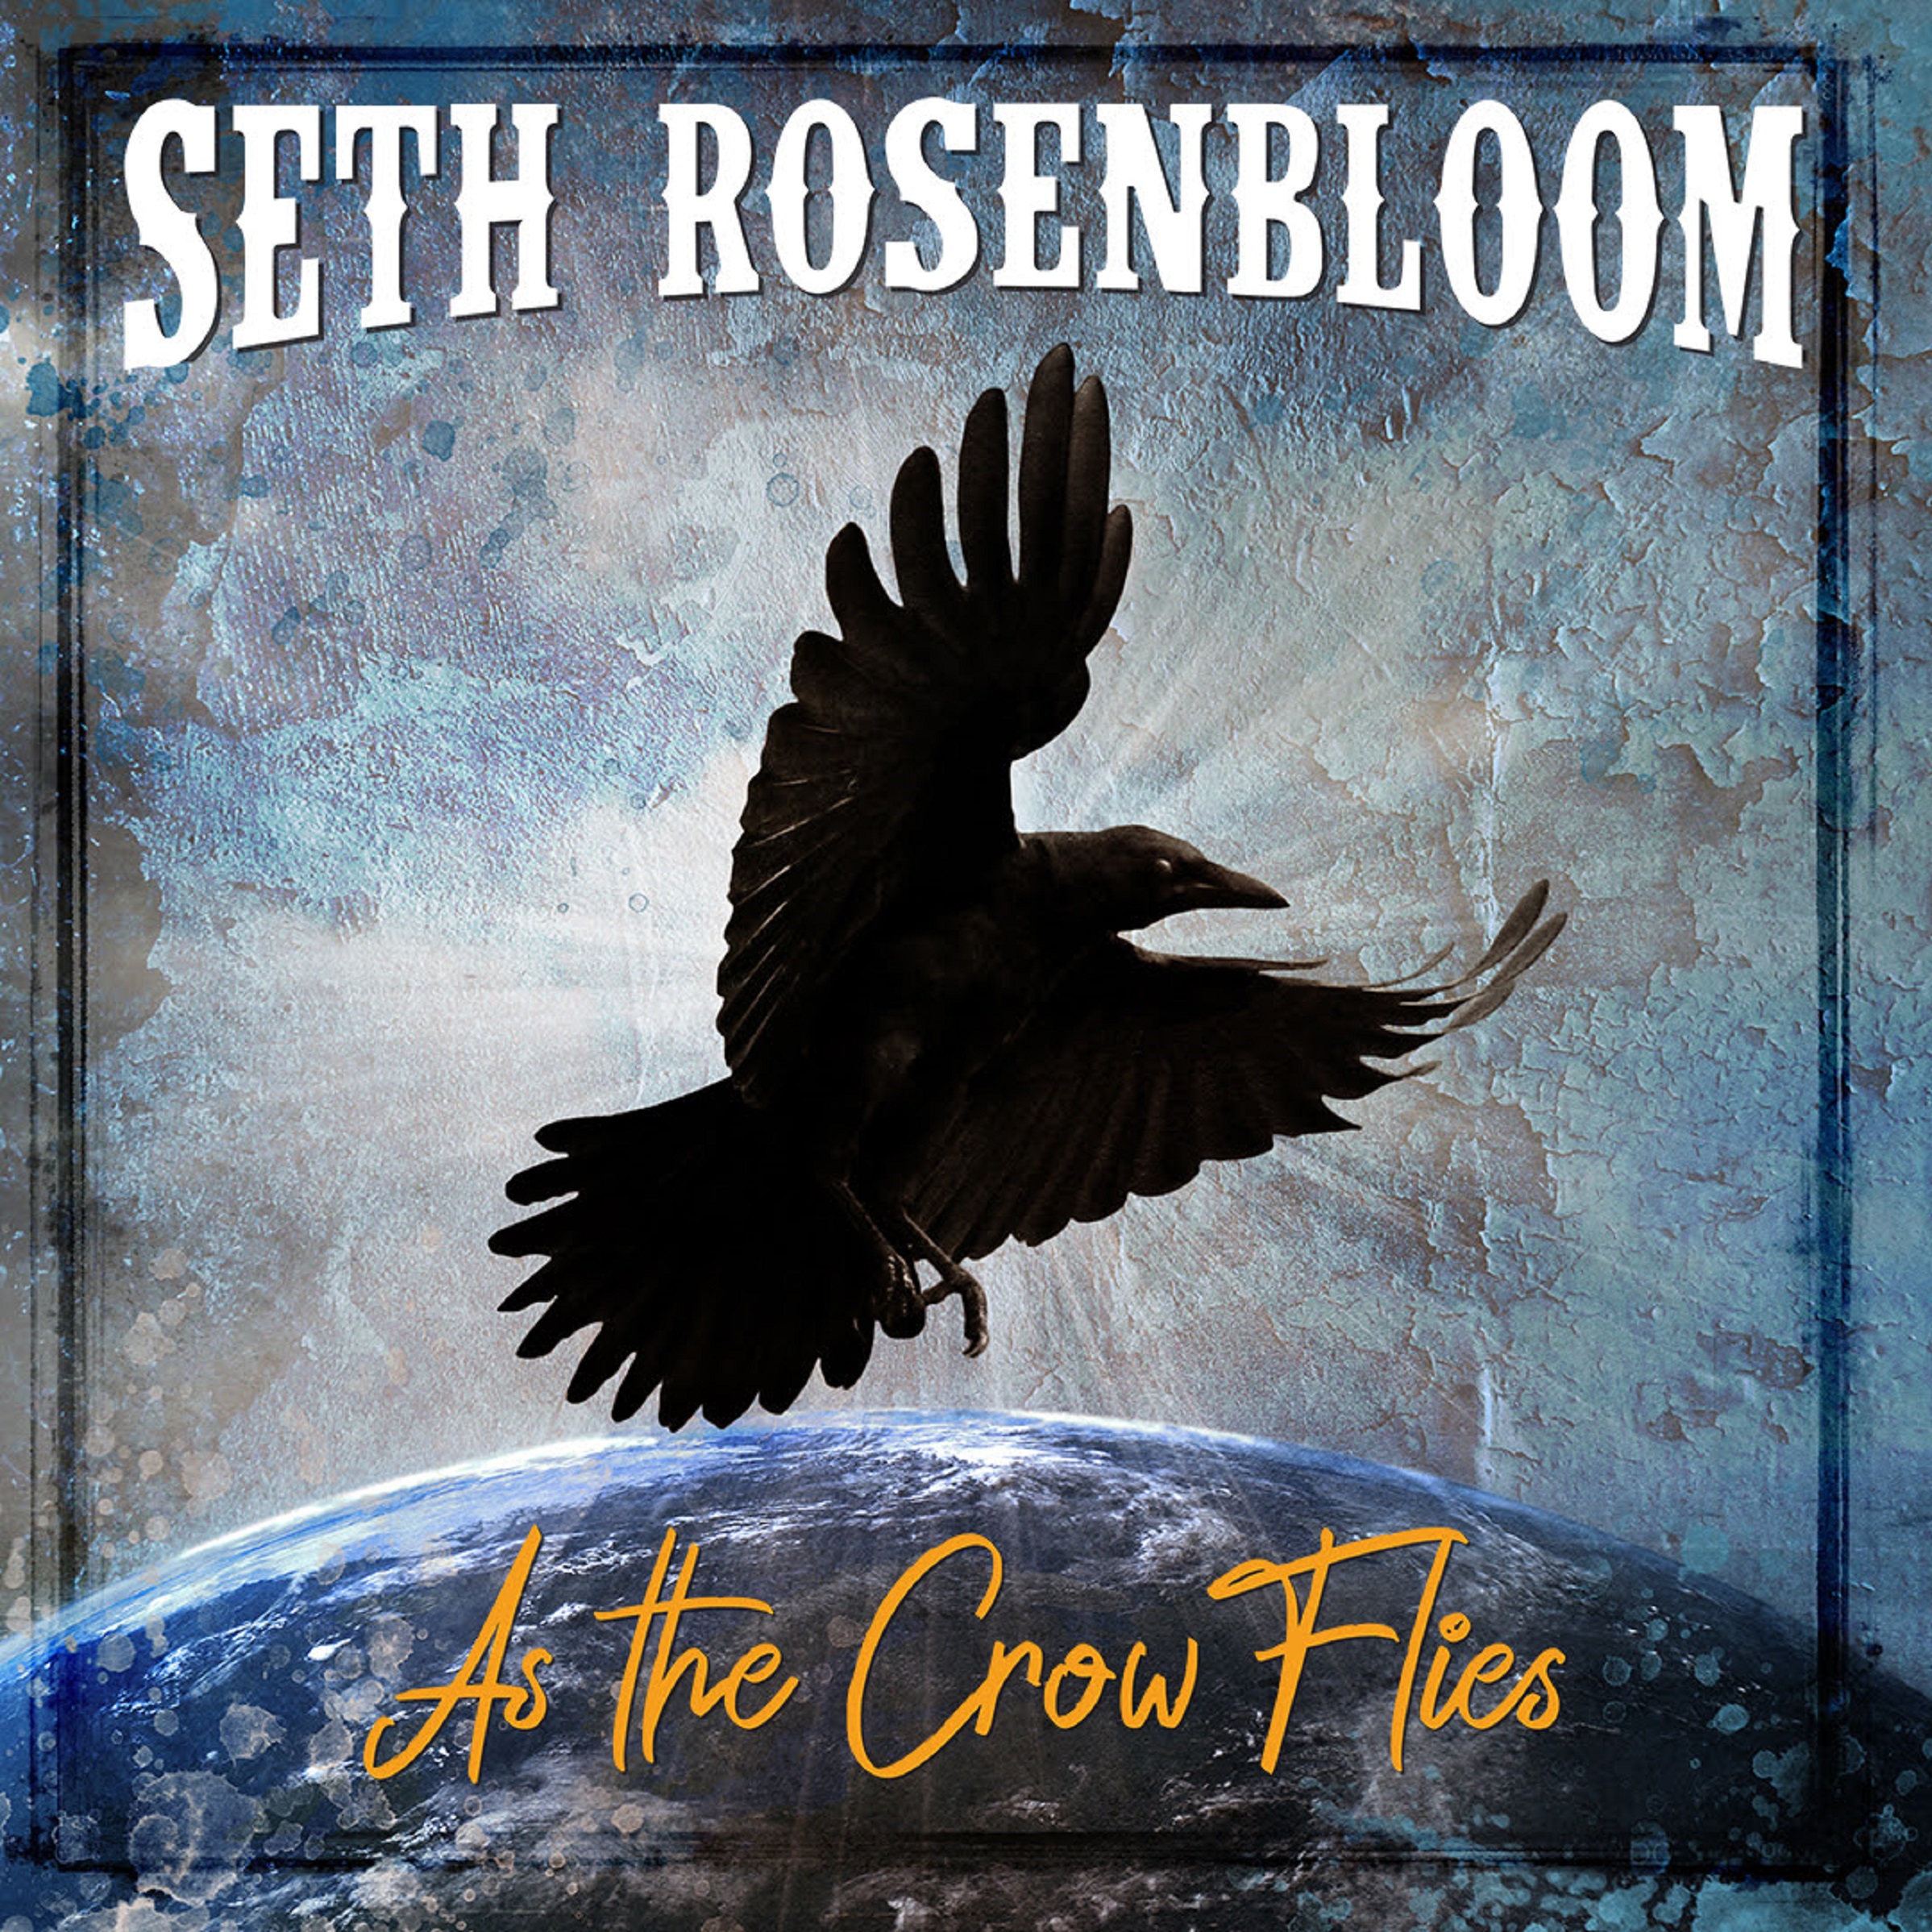 Blues Guitarist Seth Rosenbloom to Release New Disc Jan 13, 2023